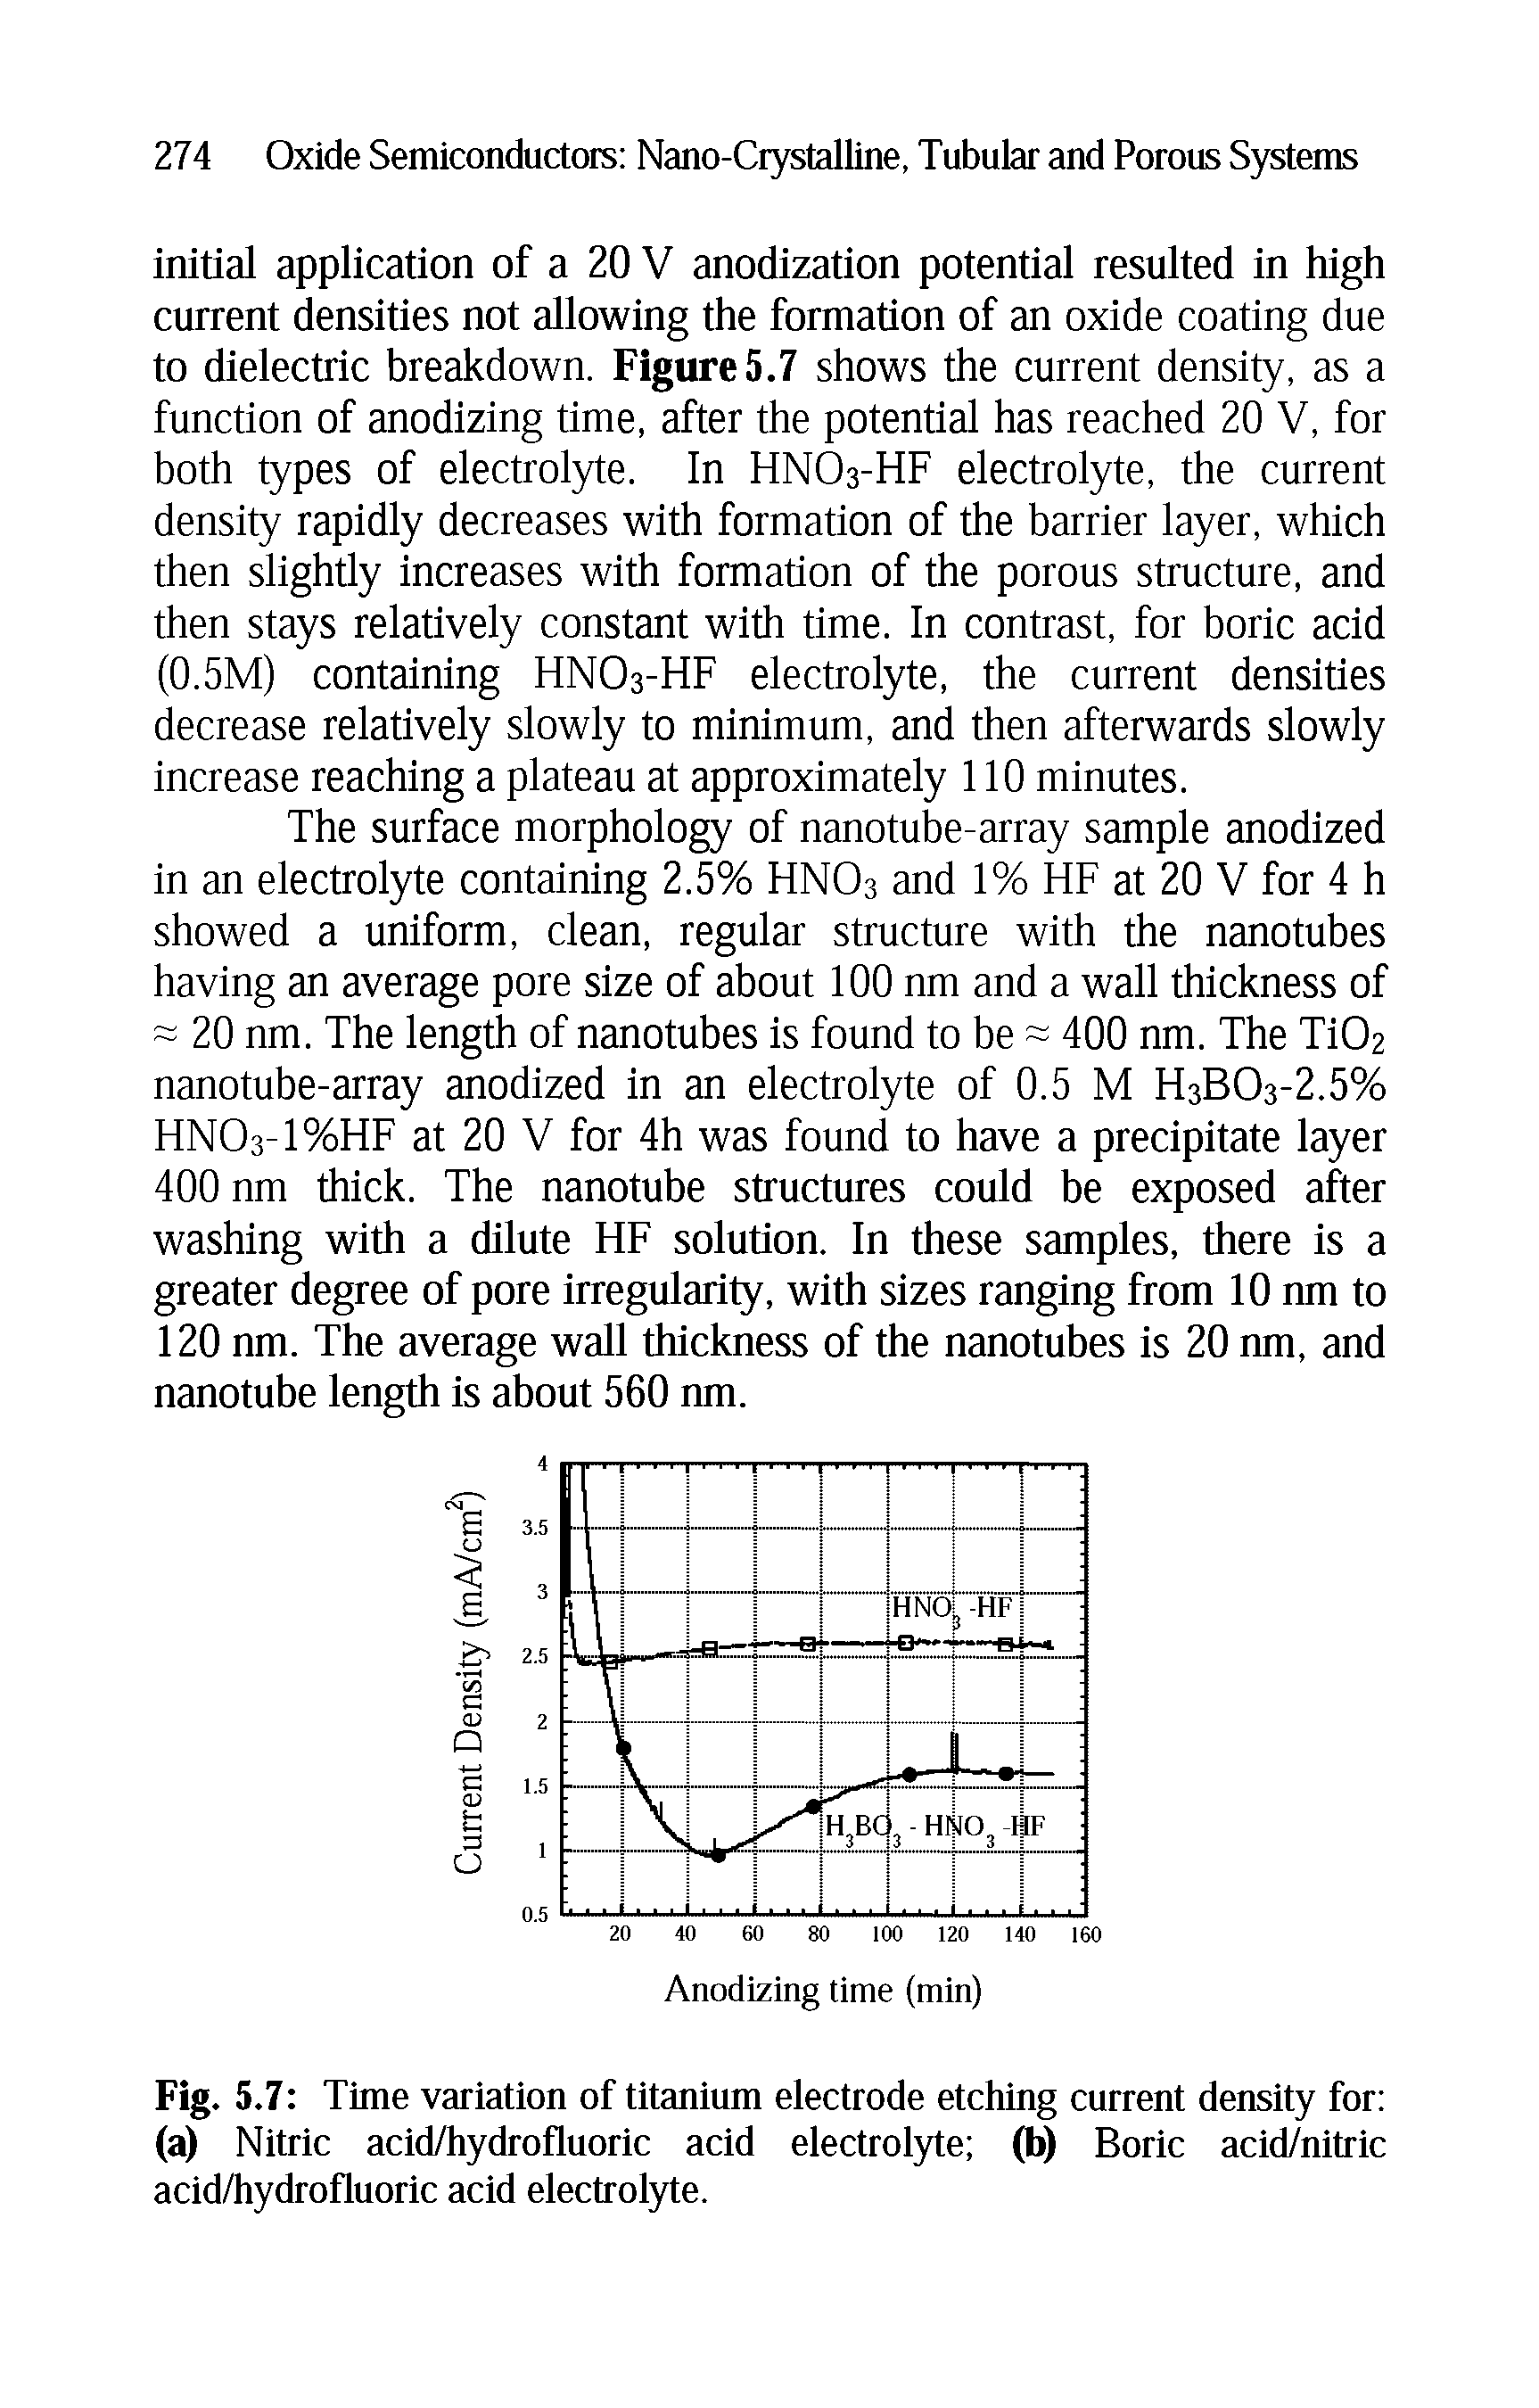 Fig. 5.7 Time variation of titanium electrode etching current density for (a) Nitric acid/hydrofluoric acid electrolyte (b) Boric acid/nitric acid/hydrofluoric acid electrolyte.